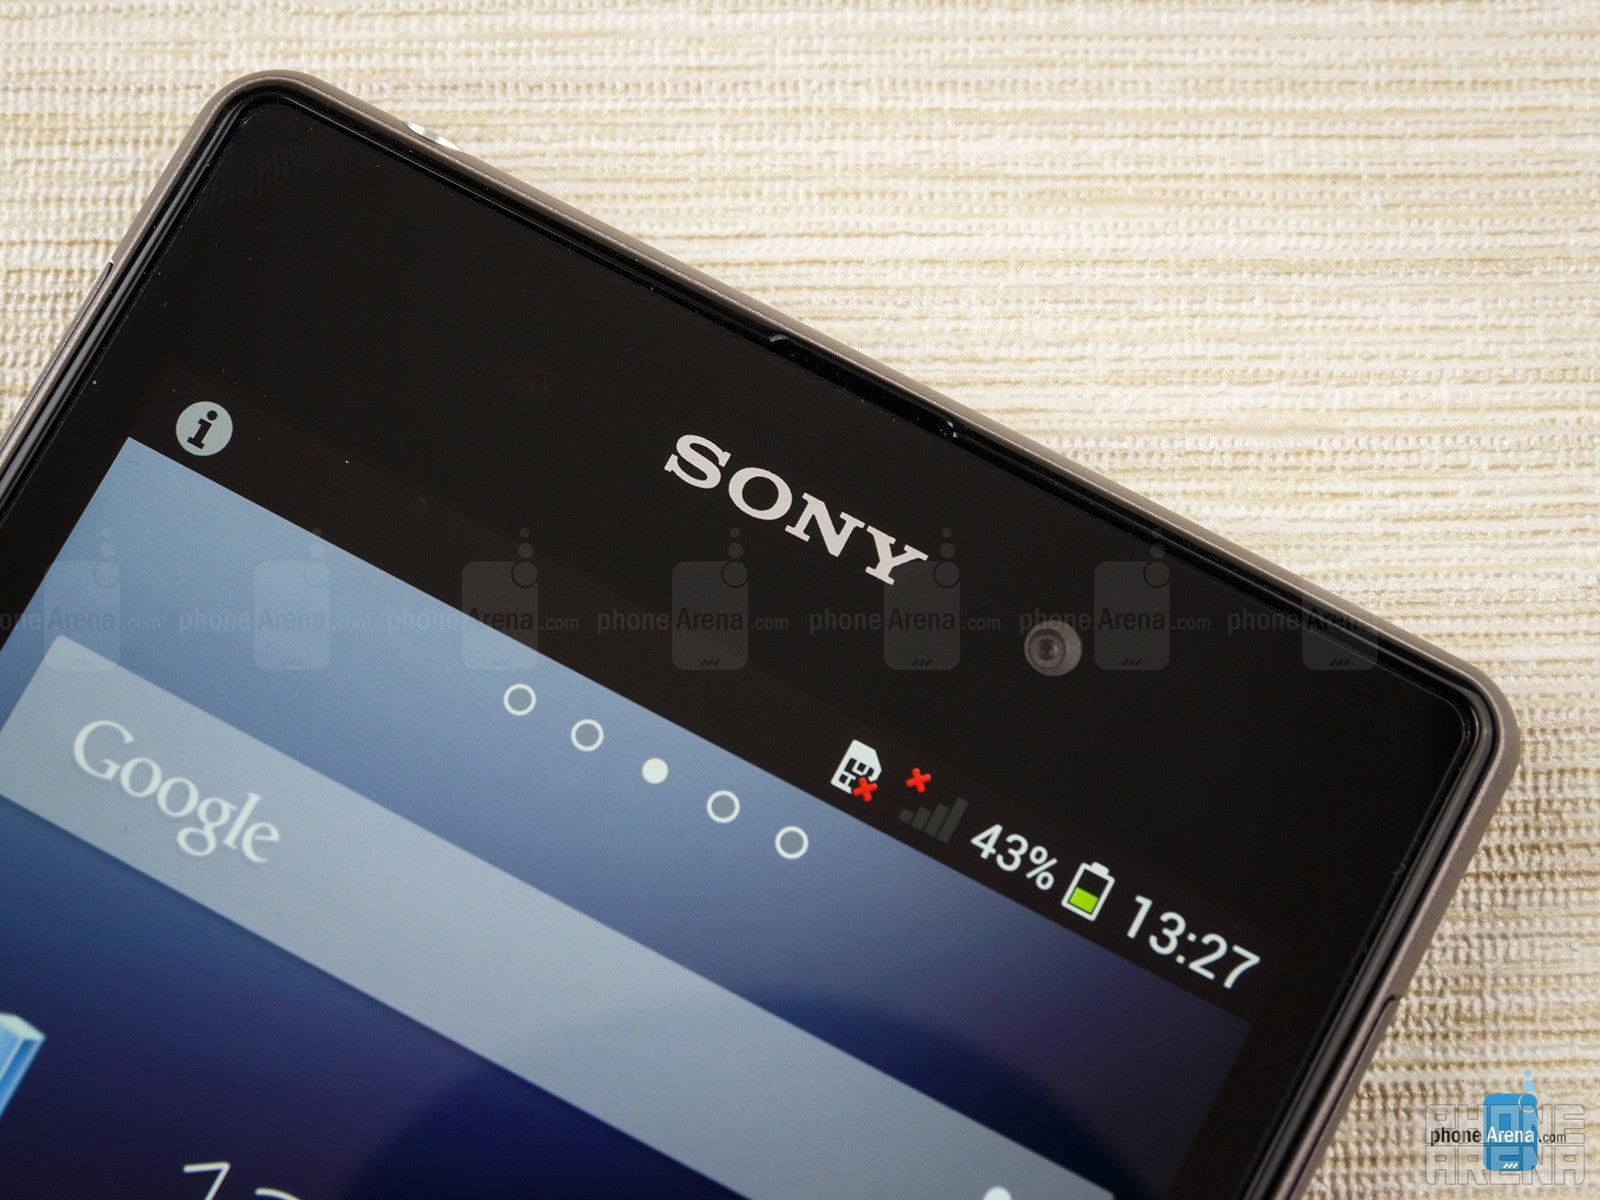 Sony Xperia Z1 Review